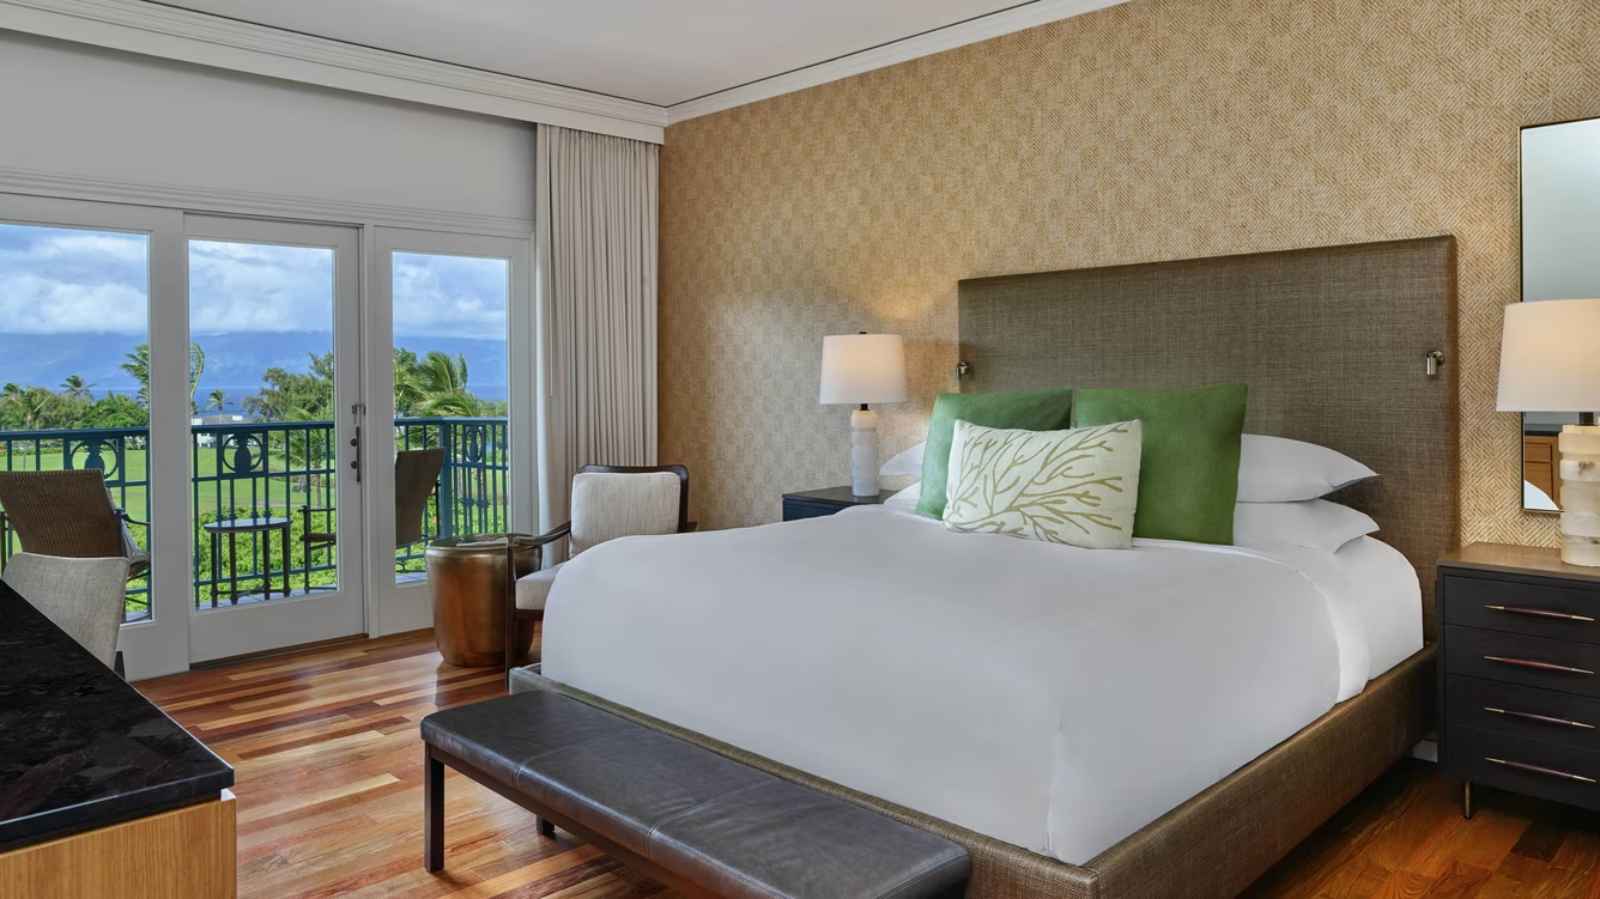 Best All Inclusive Resorts Hawaii The Ritz Carlton Maui, Kapalua2